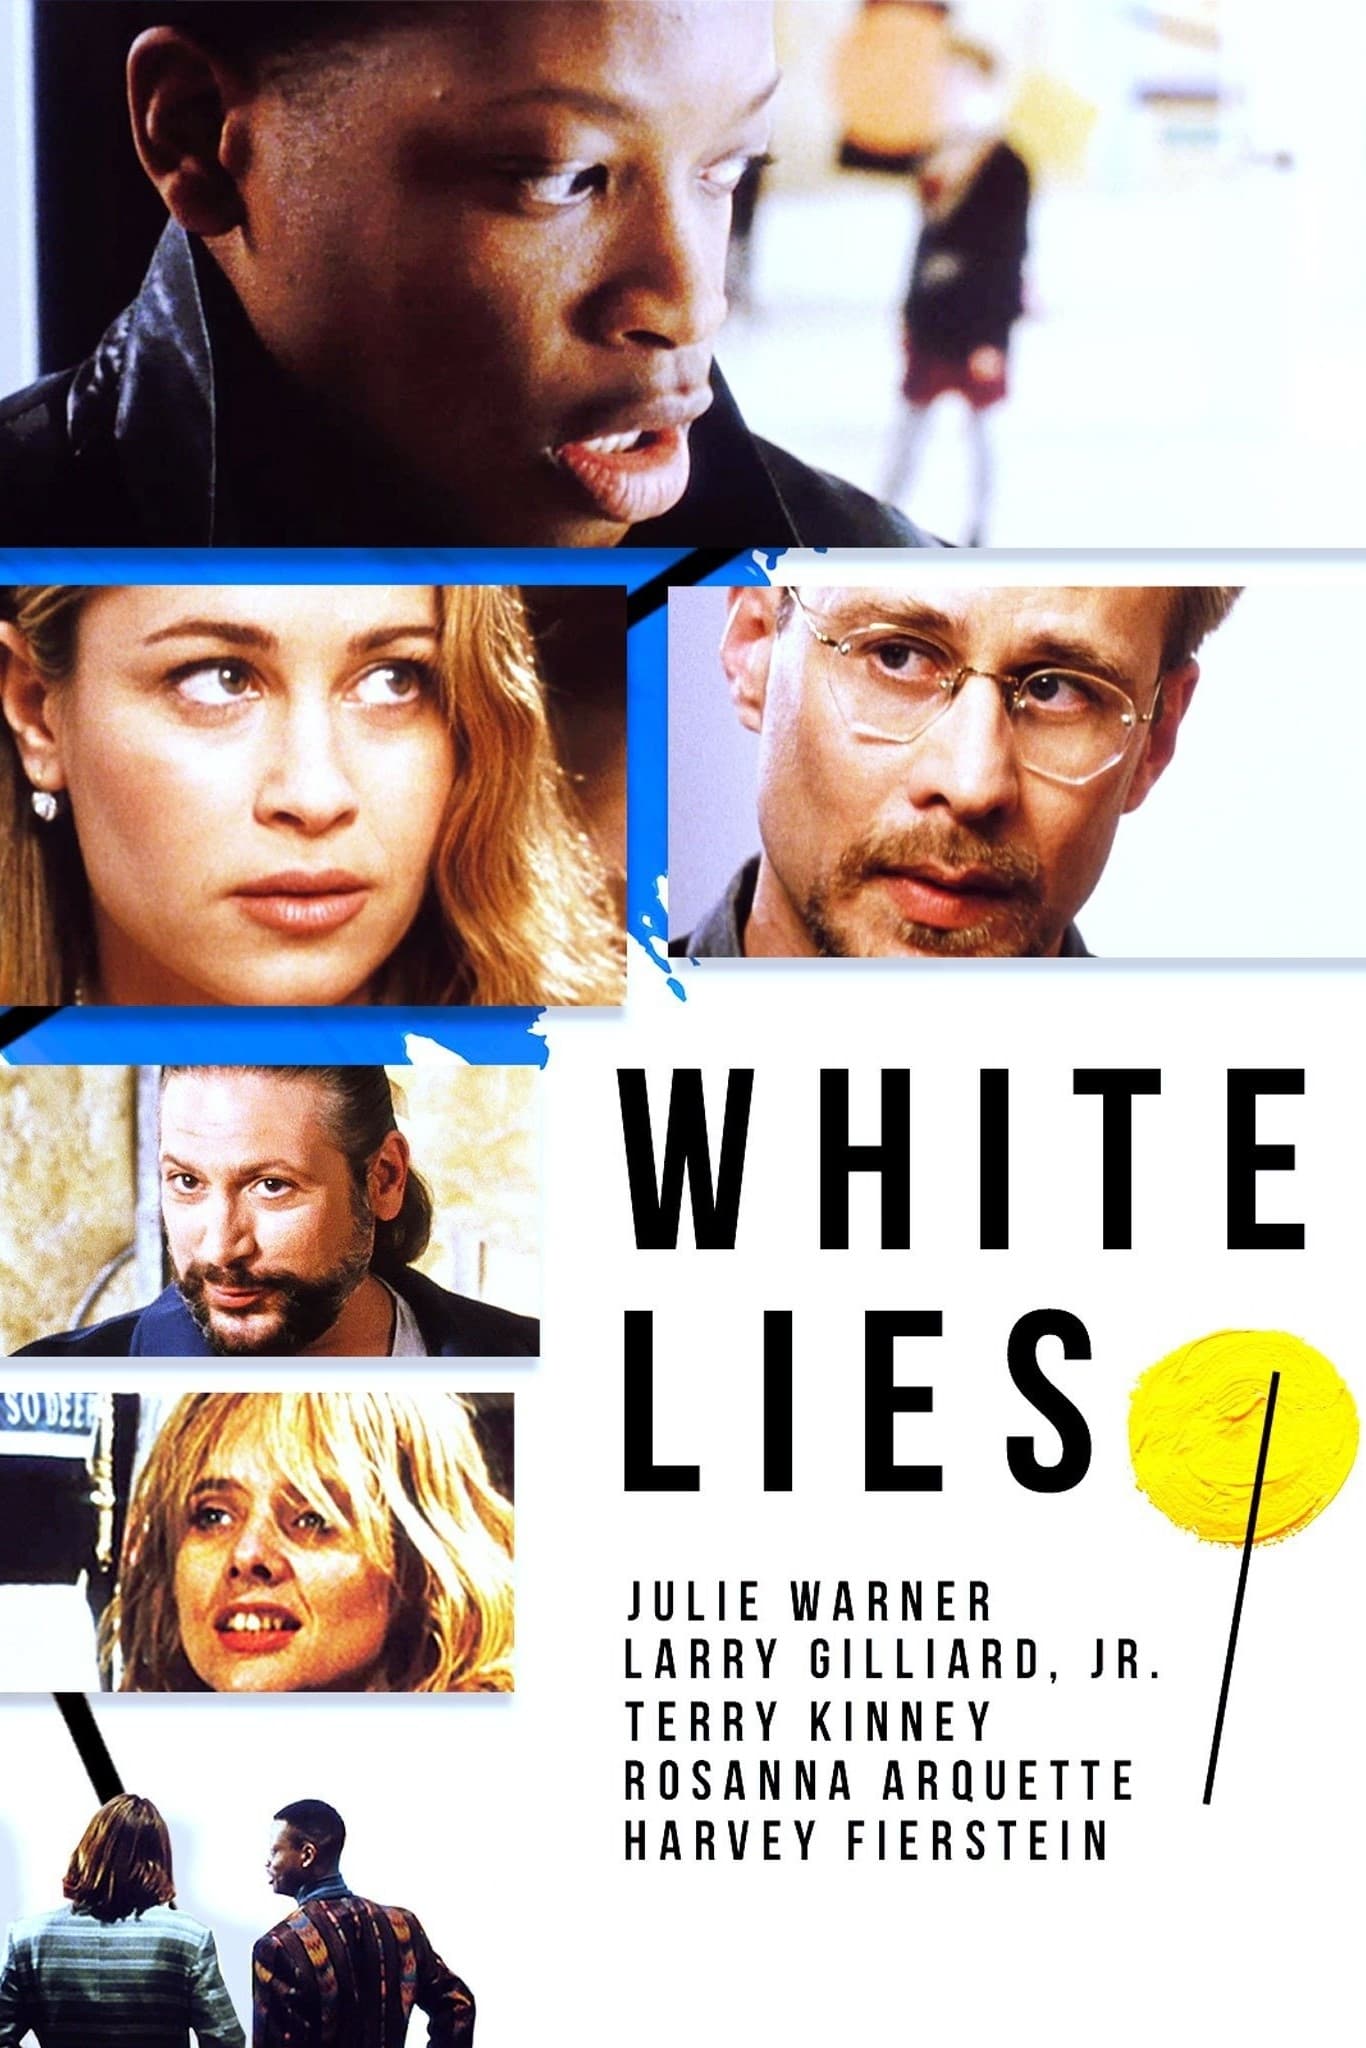 White Lies (1997)